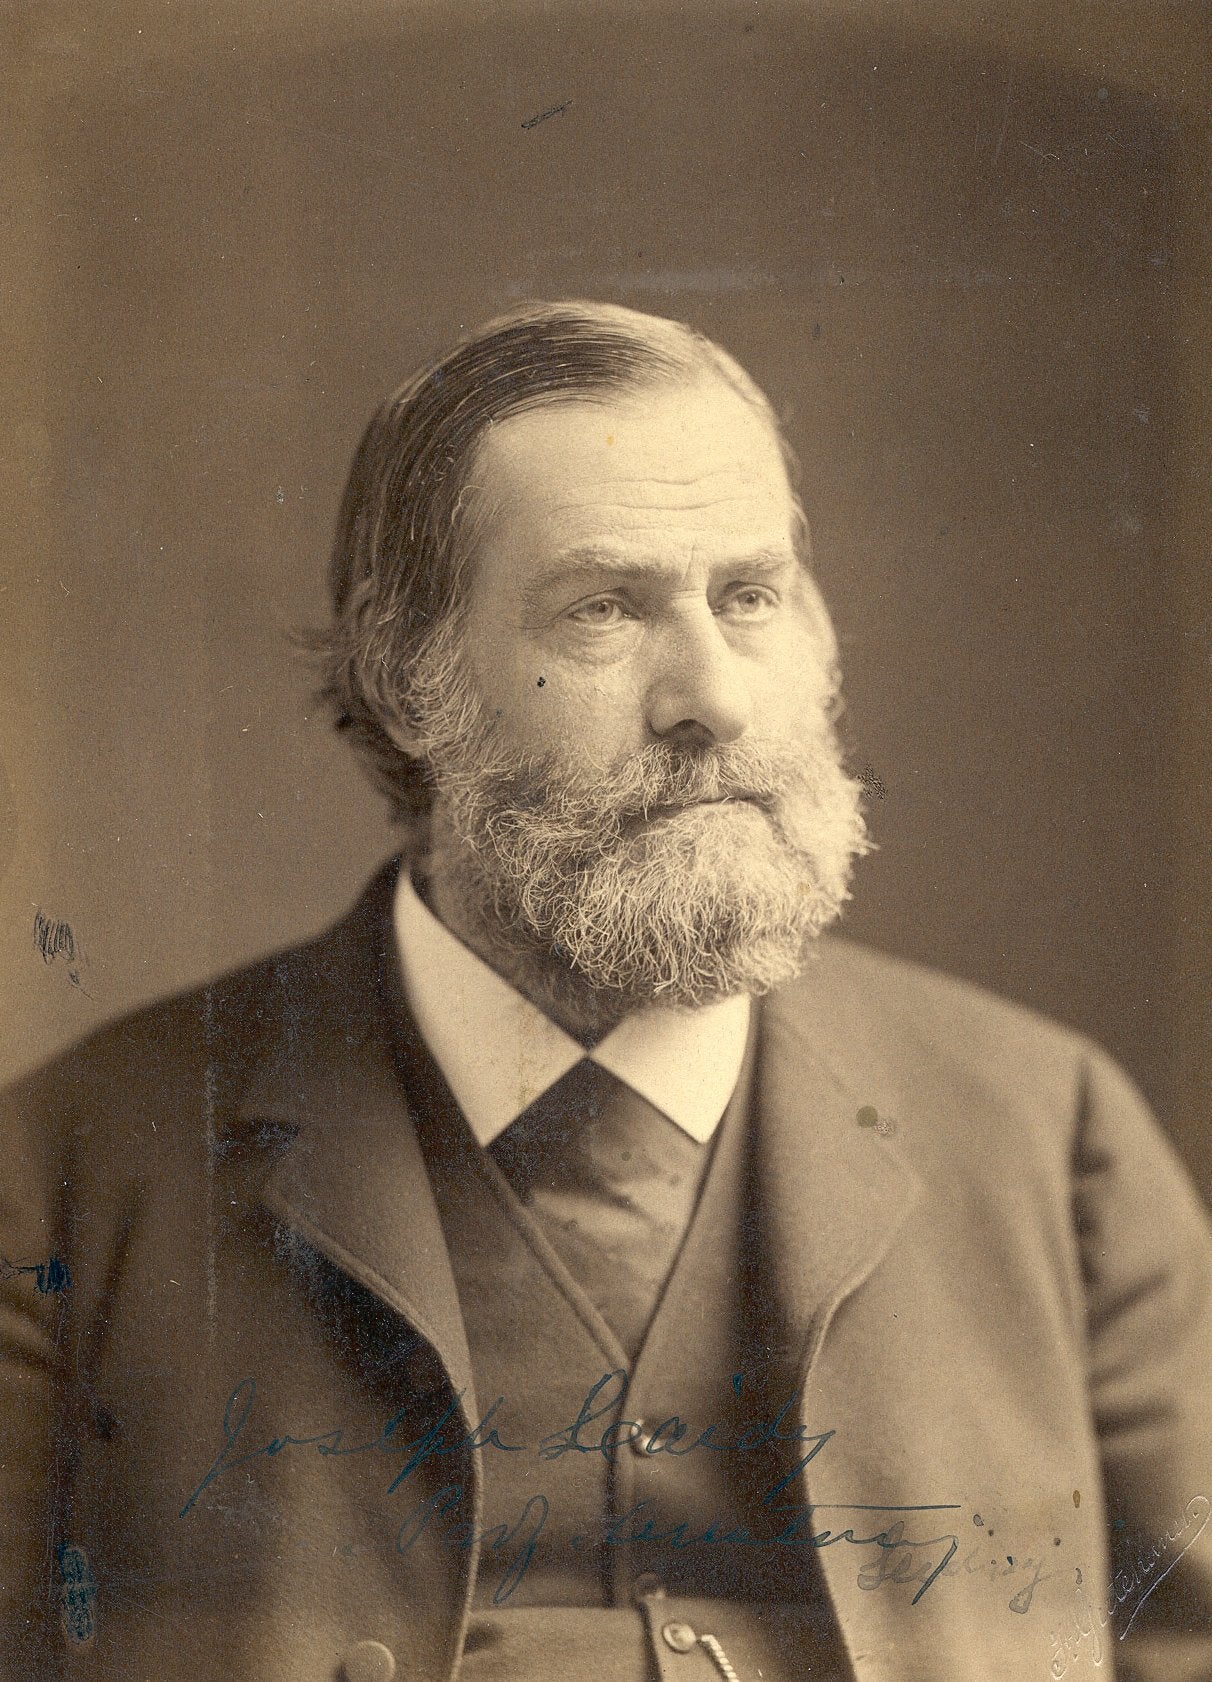 Joseph Leidy, c. 1880